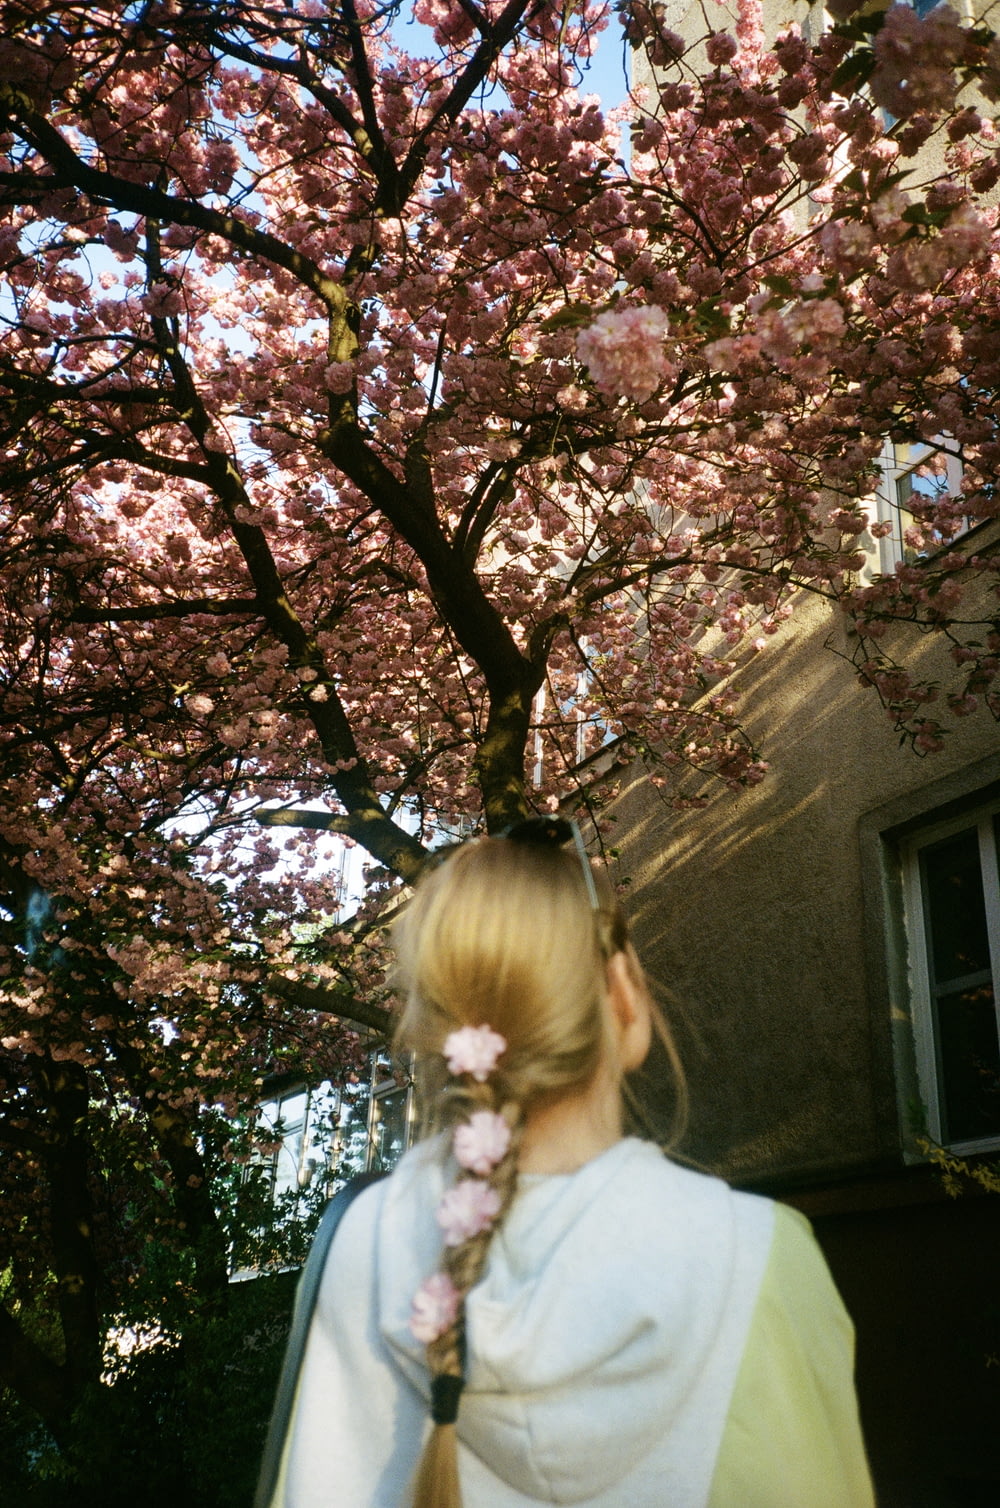 girl in white shirt standing under pink cherry blossom tree during daytime